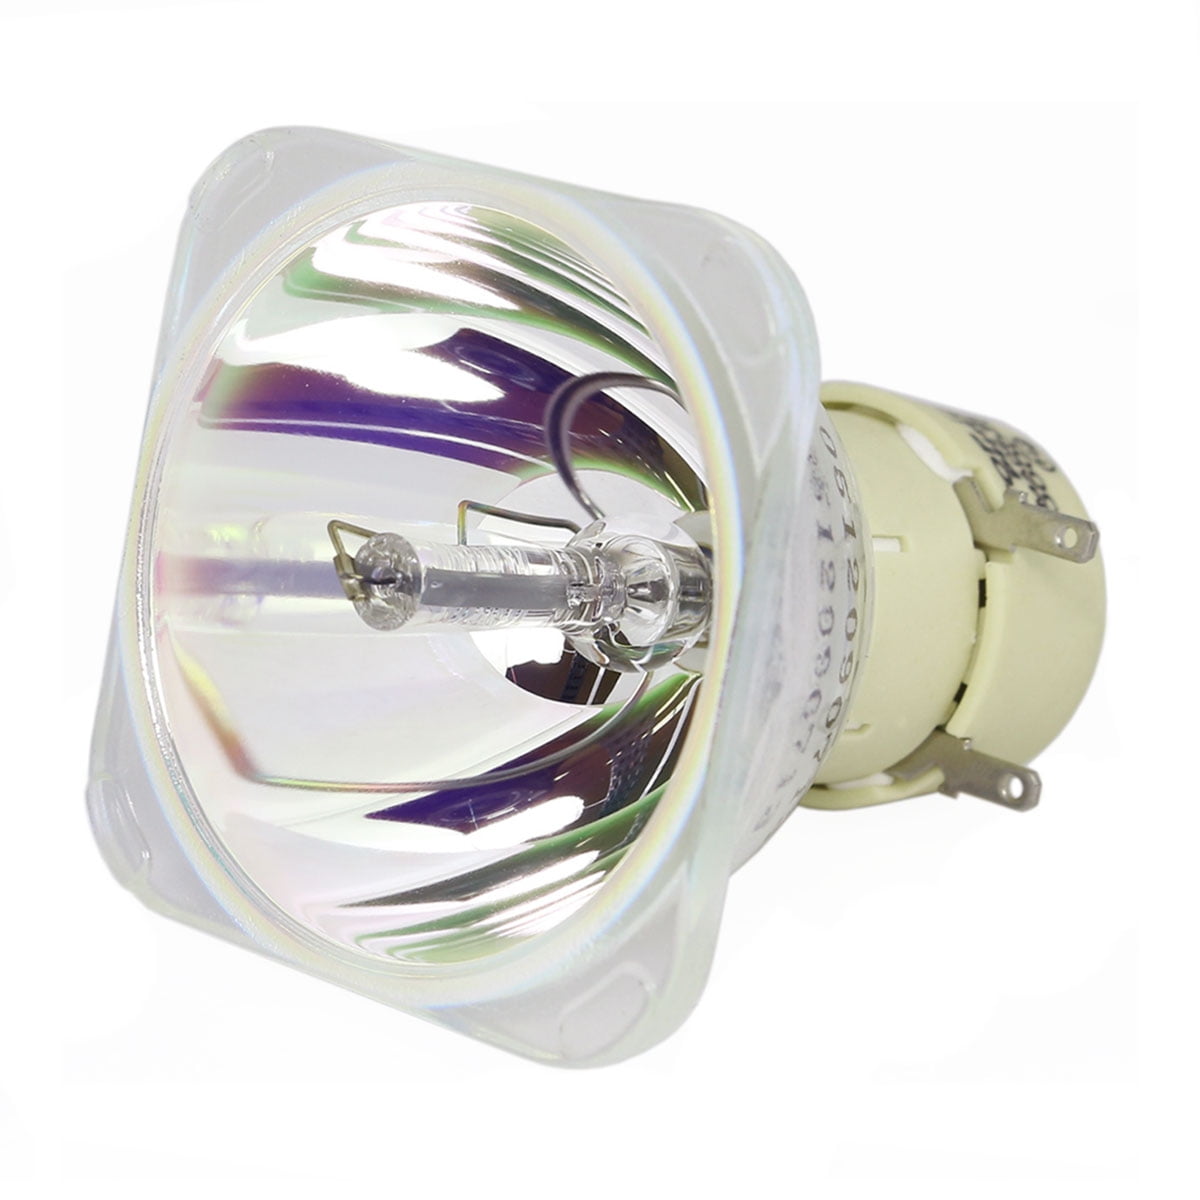 Original Philips Inside Lutema Platinum Bulb for Dell 1650 Projector Lamp 